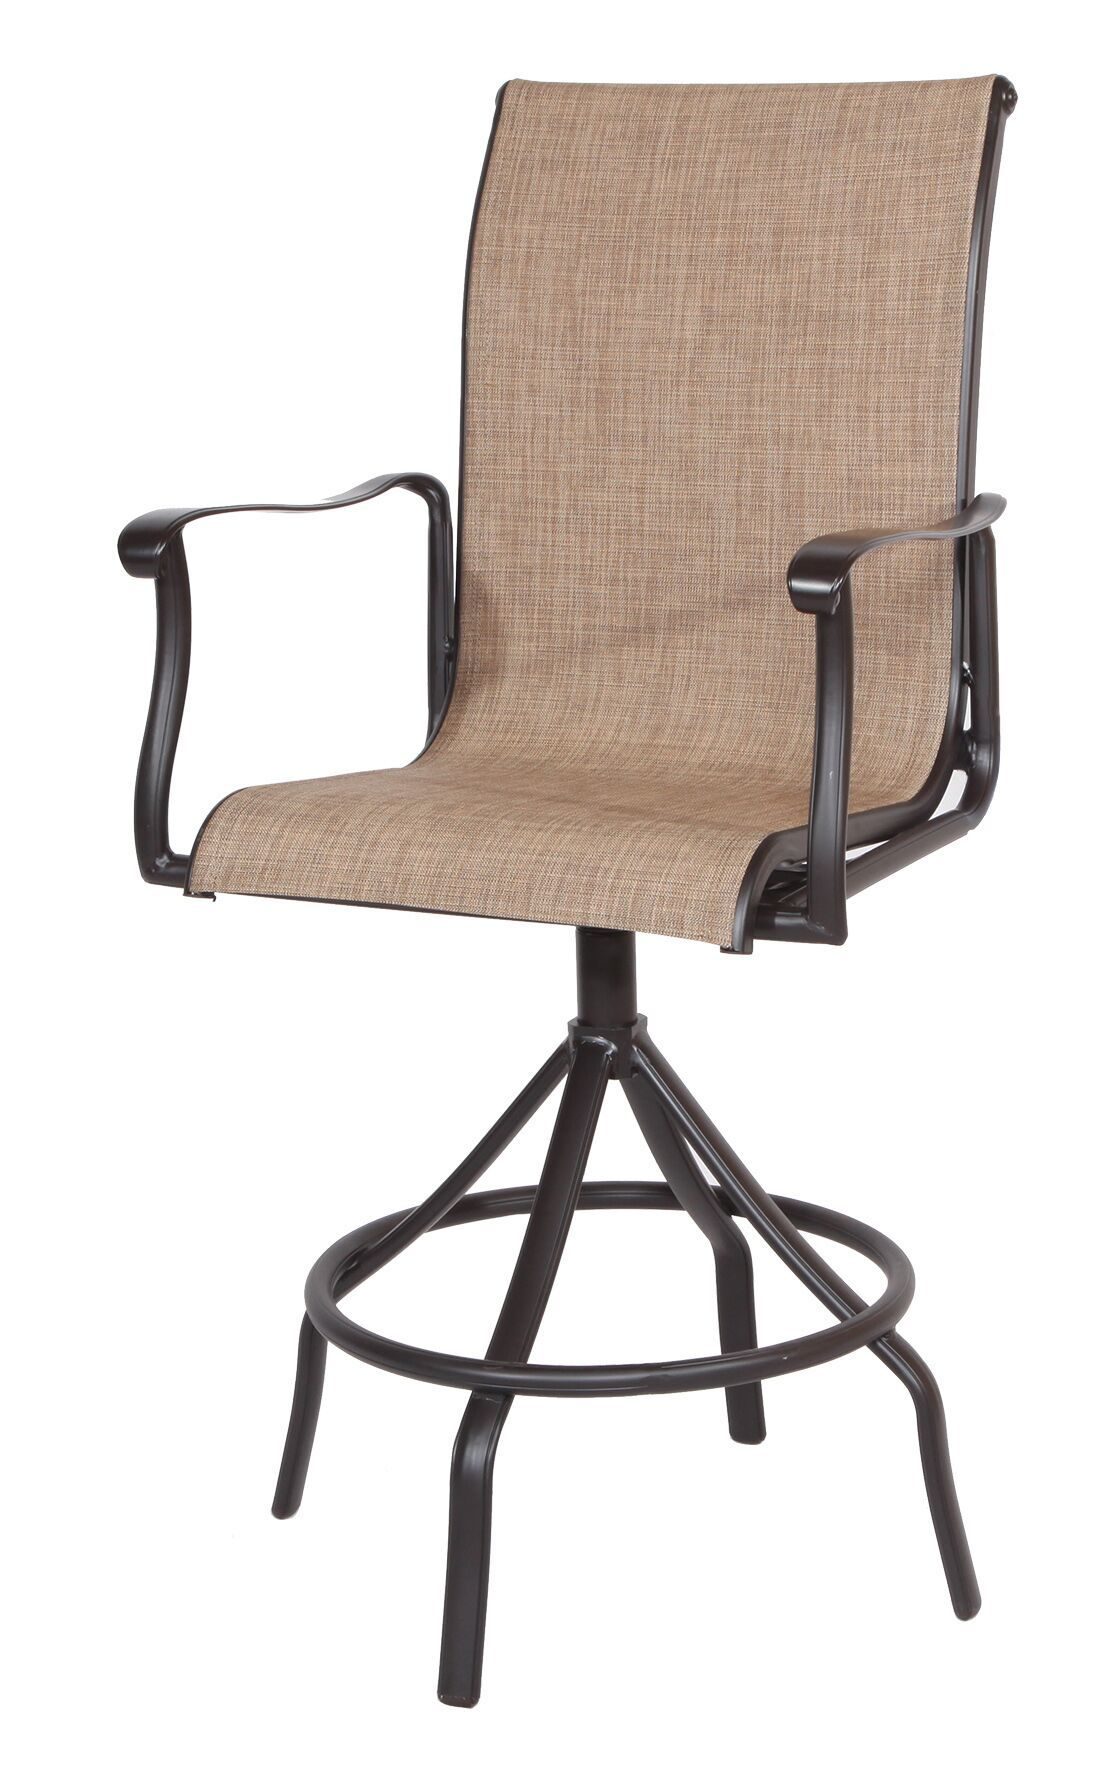 3i Corporation recalls bar chairs